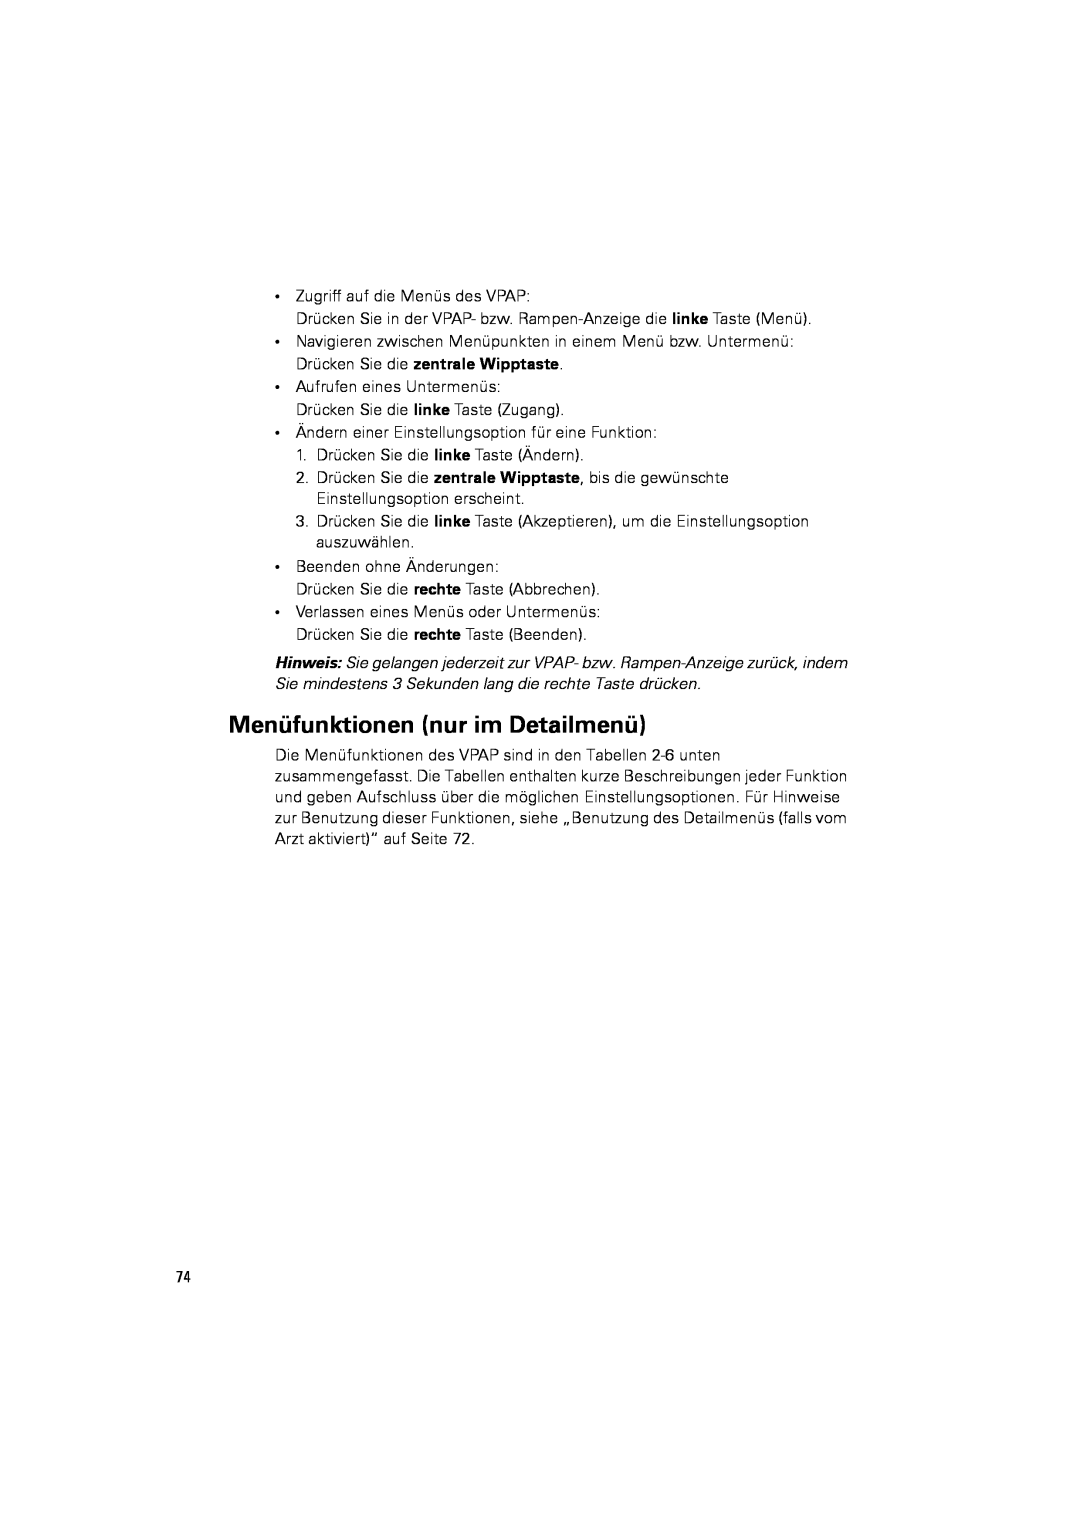 ResMed III & III ST user manual Menüfunktionen nur im Detailmenü 